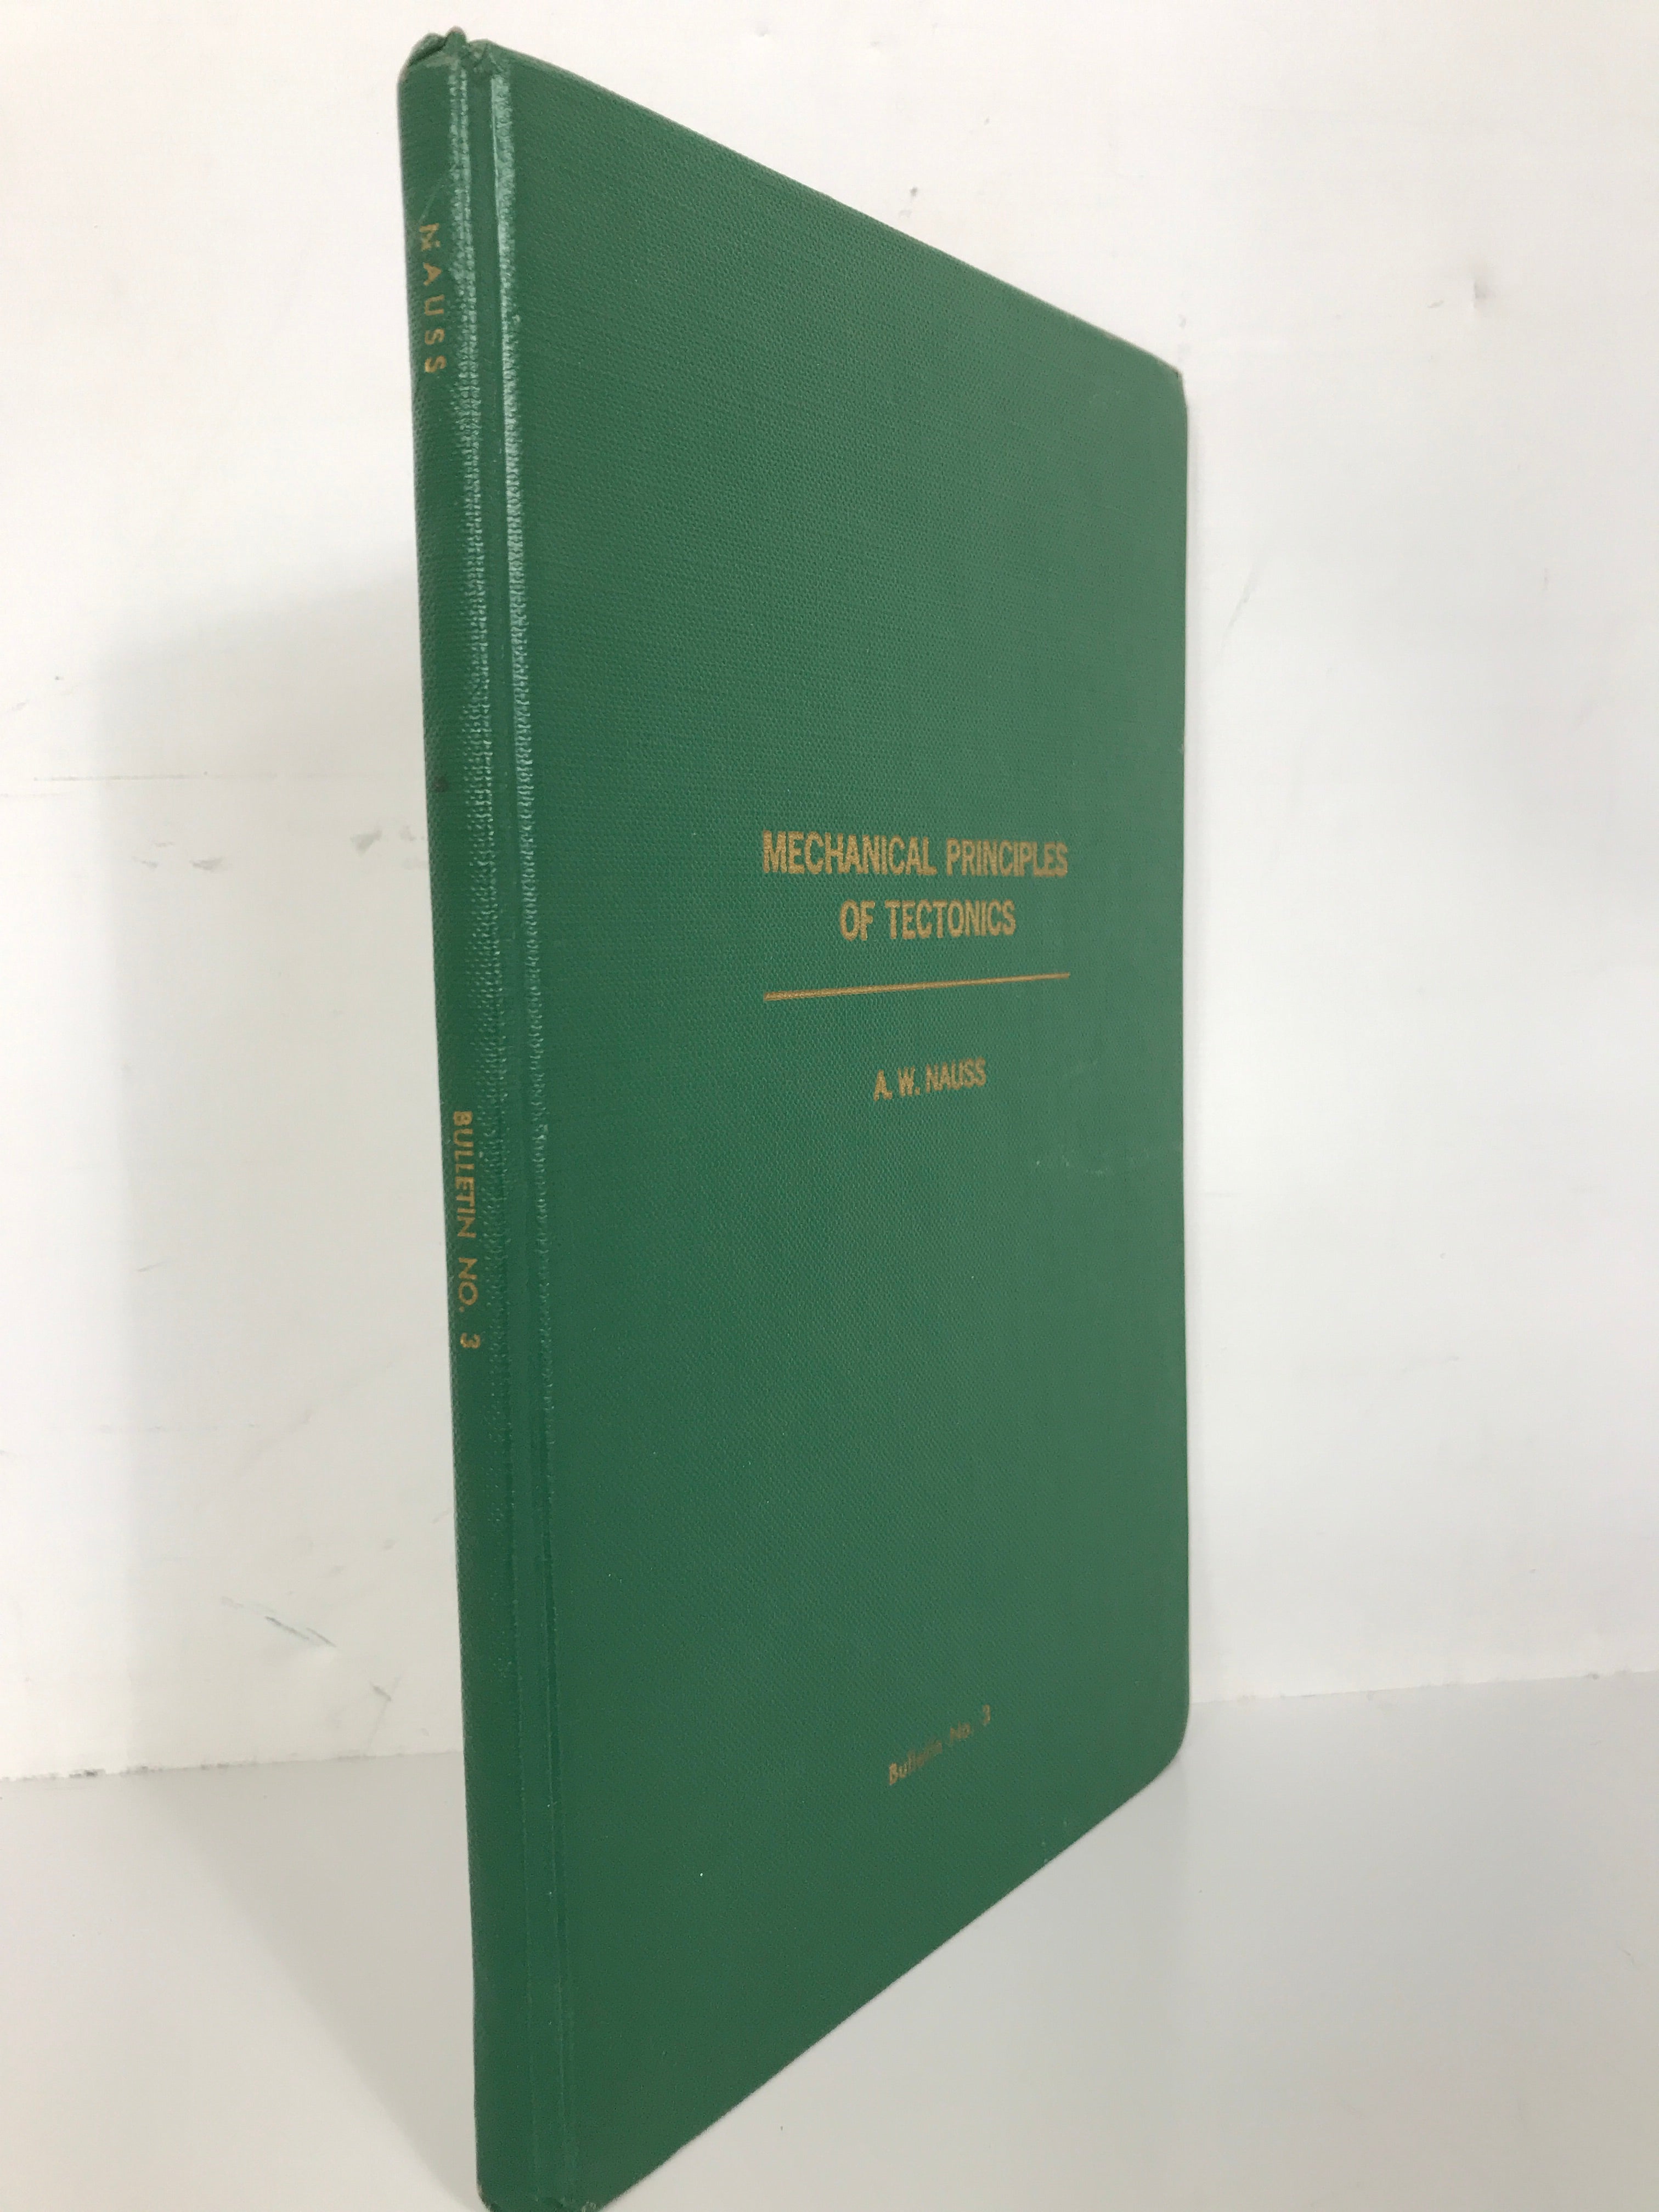 Rare Mechanical Principles of Tectonics by A.W. Nauss 1971 Bulletin No 3 HC